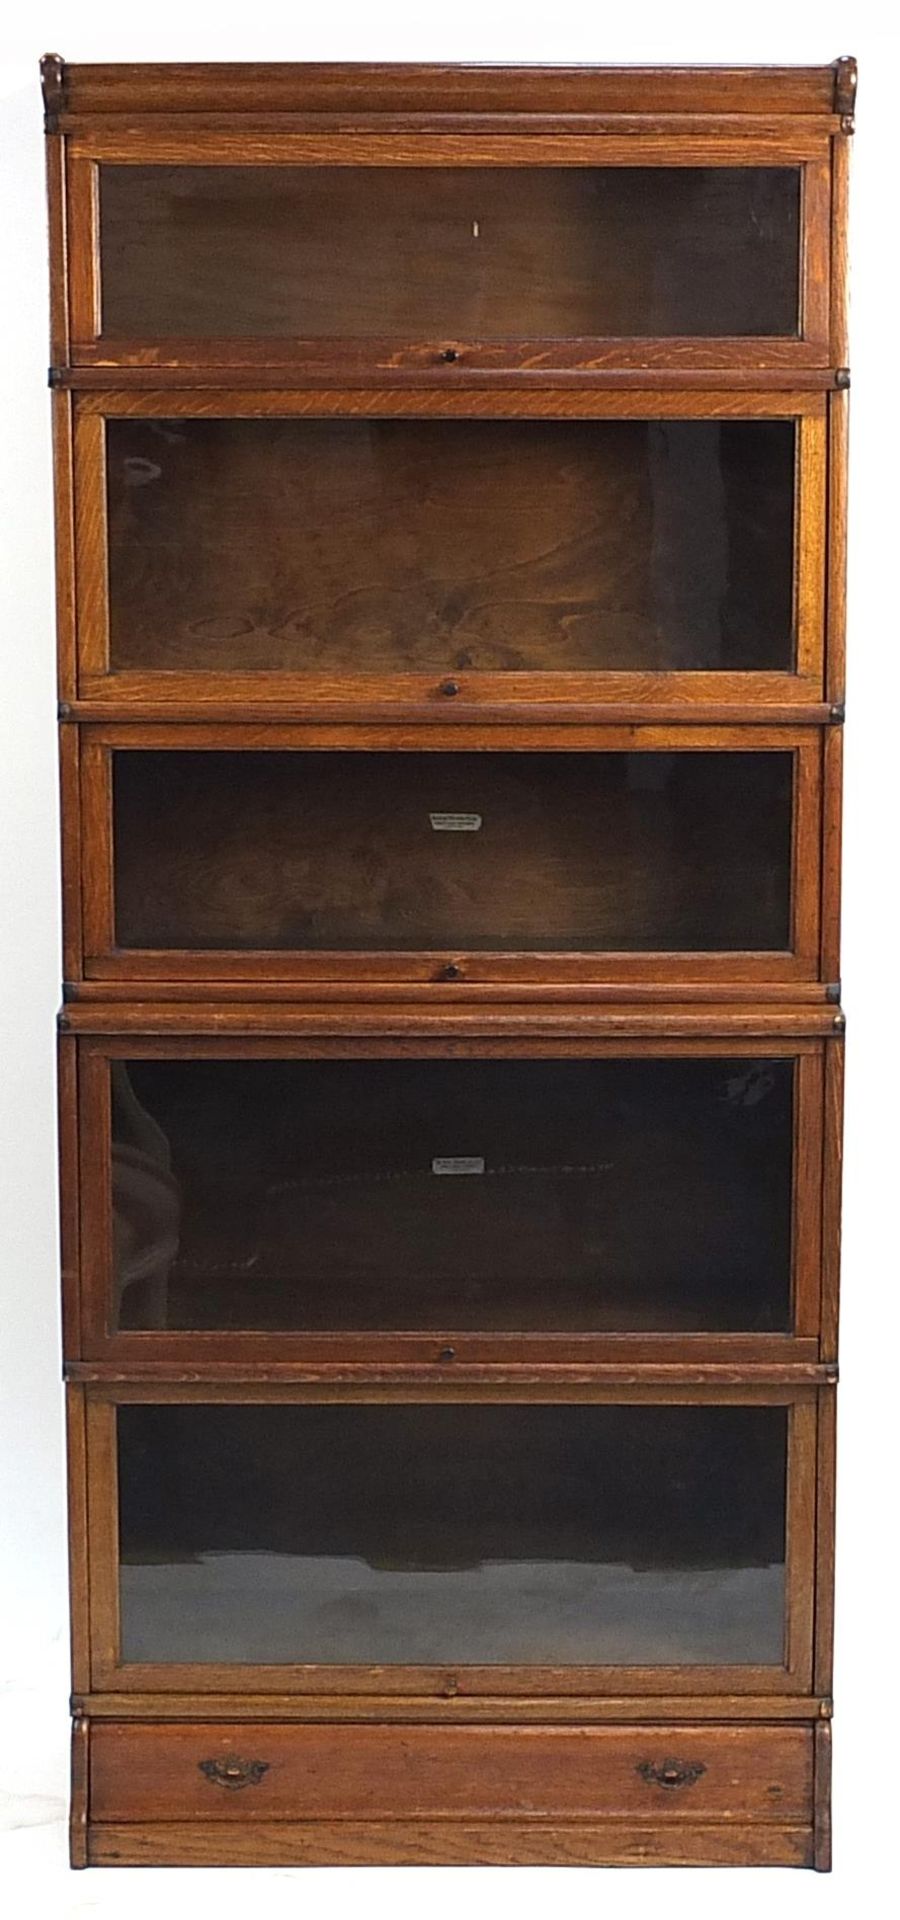 Globe Wernicke oak five tier glazed bookcase on stand with base drawer, 200cm x 86.5cm W x 38cm D